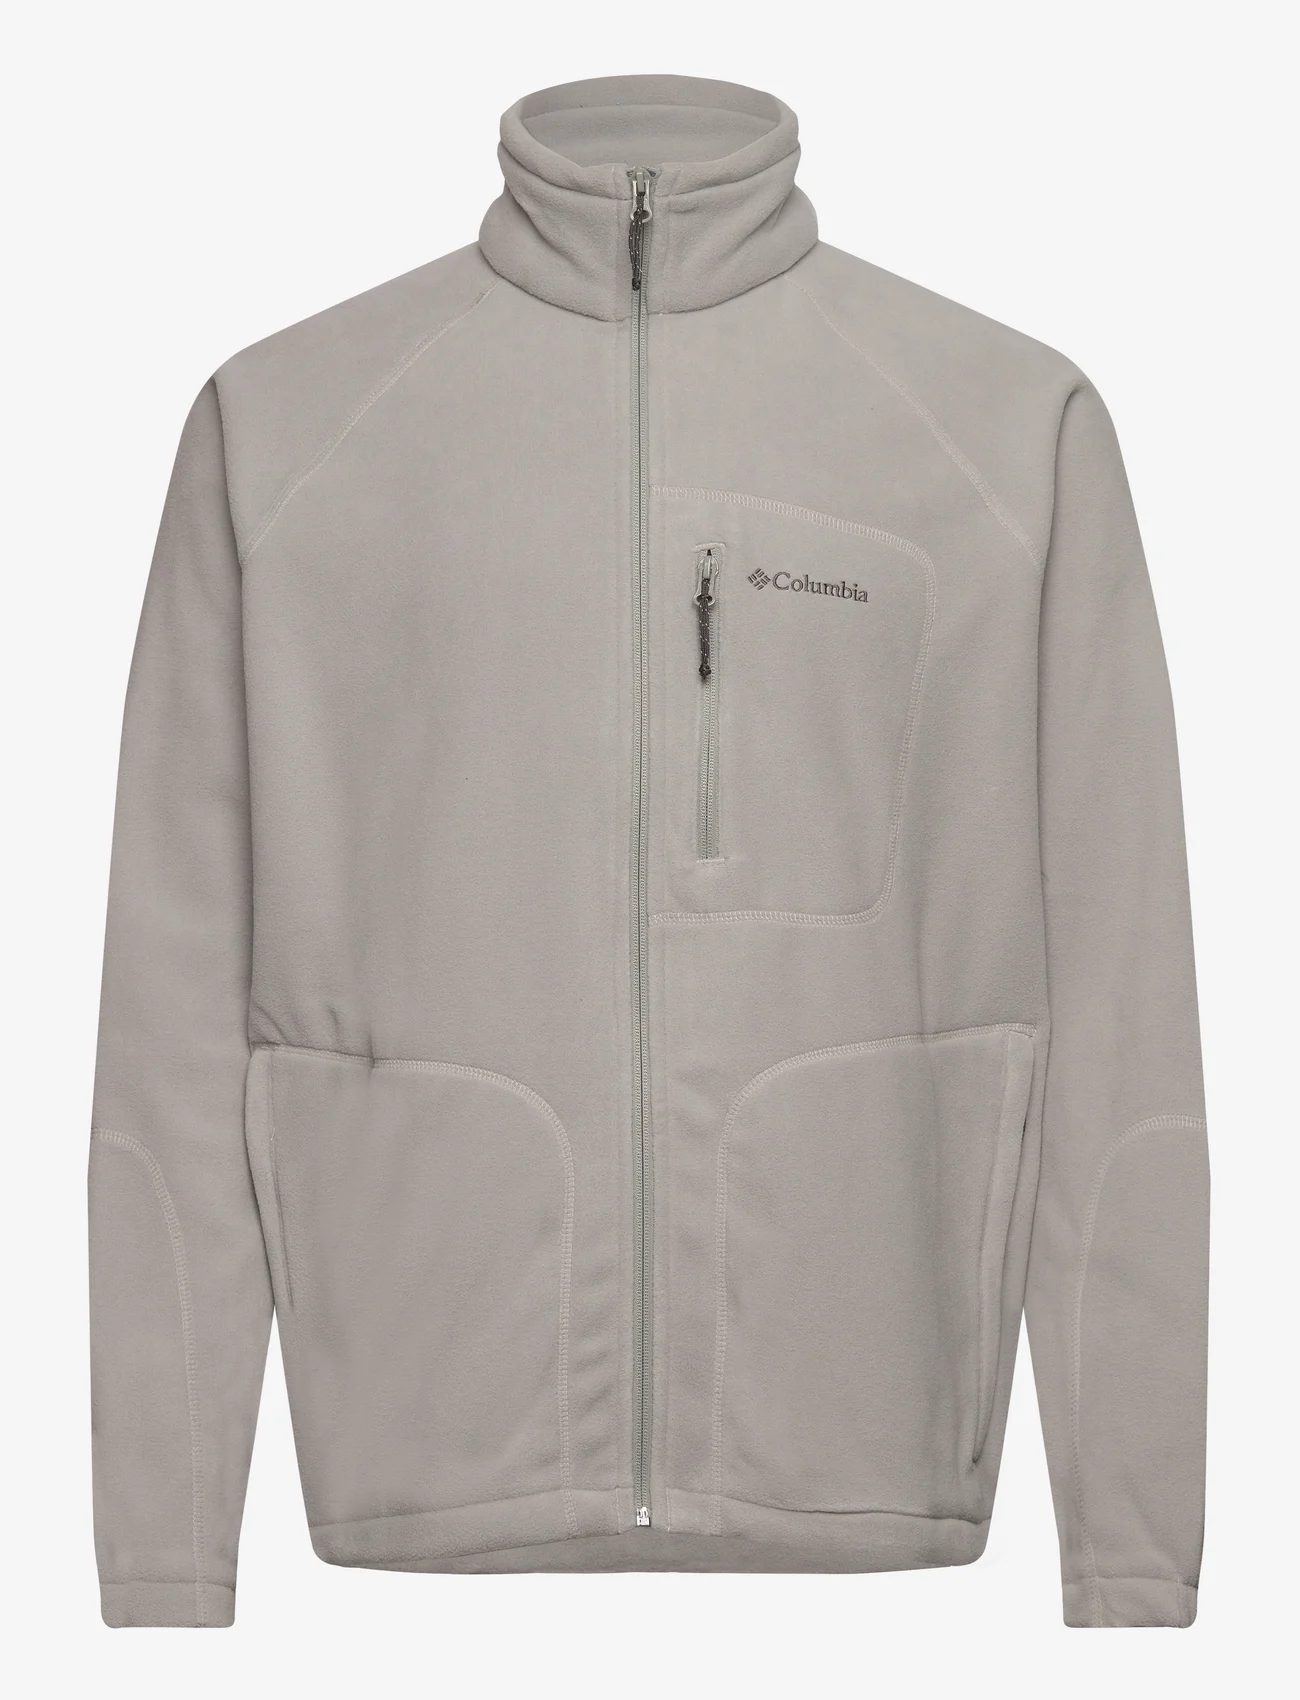 Columbia Sportswear - Fast Trek II Full Zip Fleece - vesten - flint grey - 0